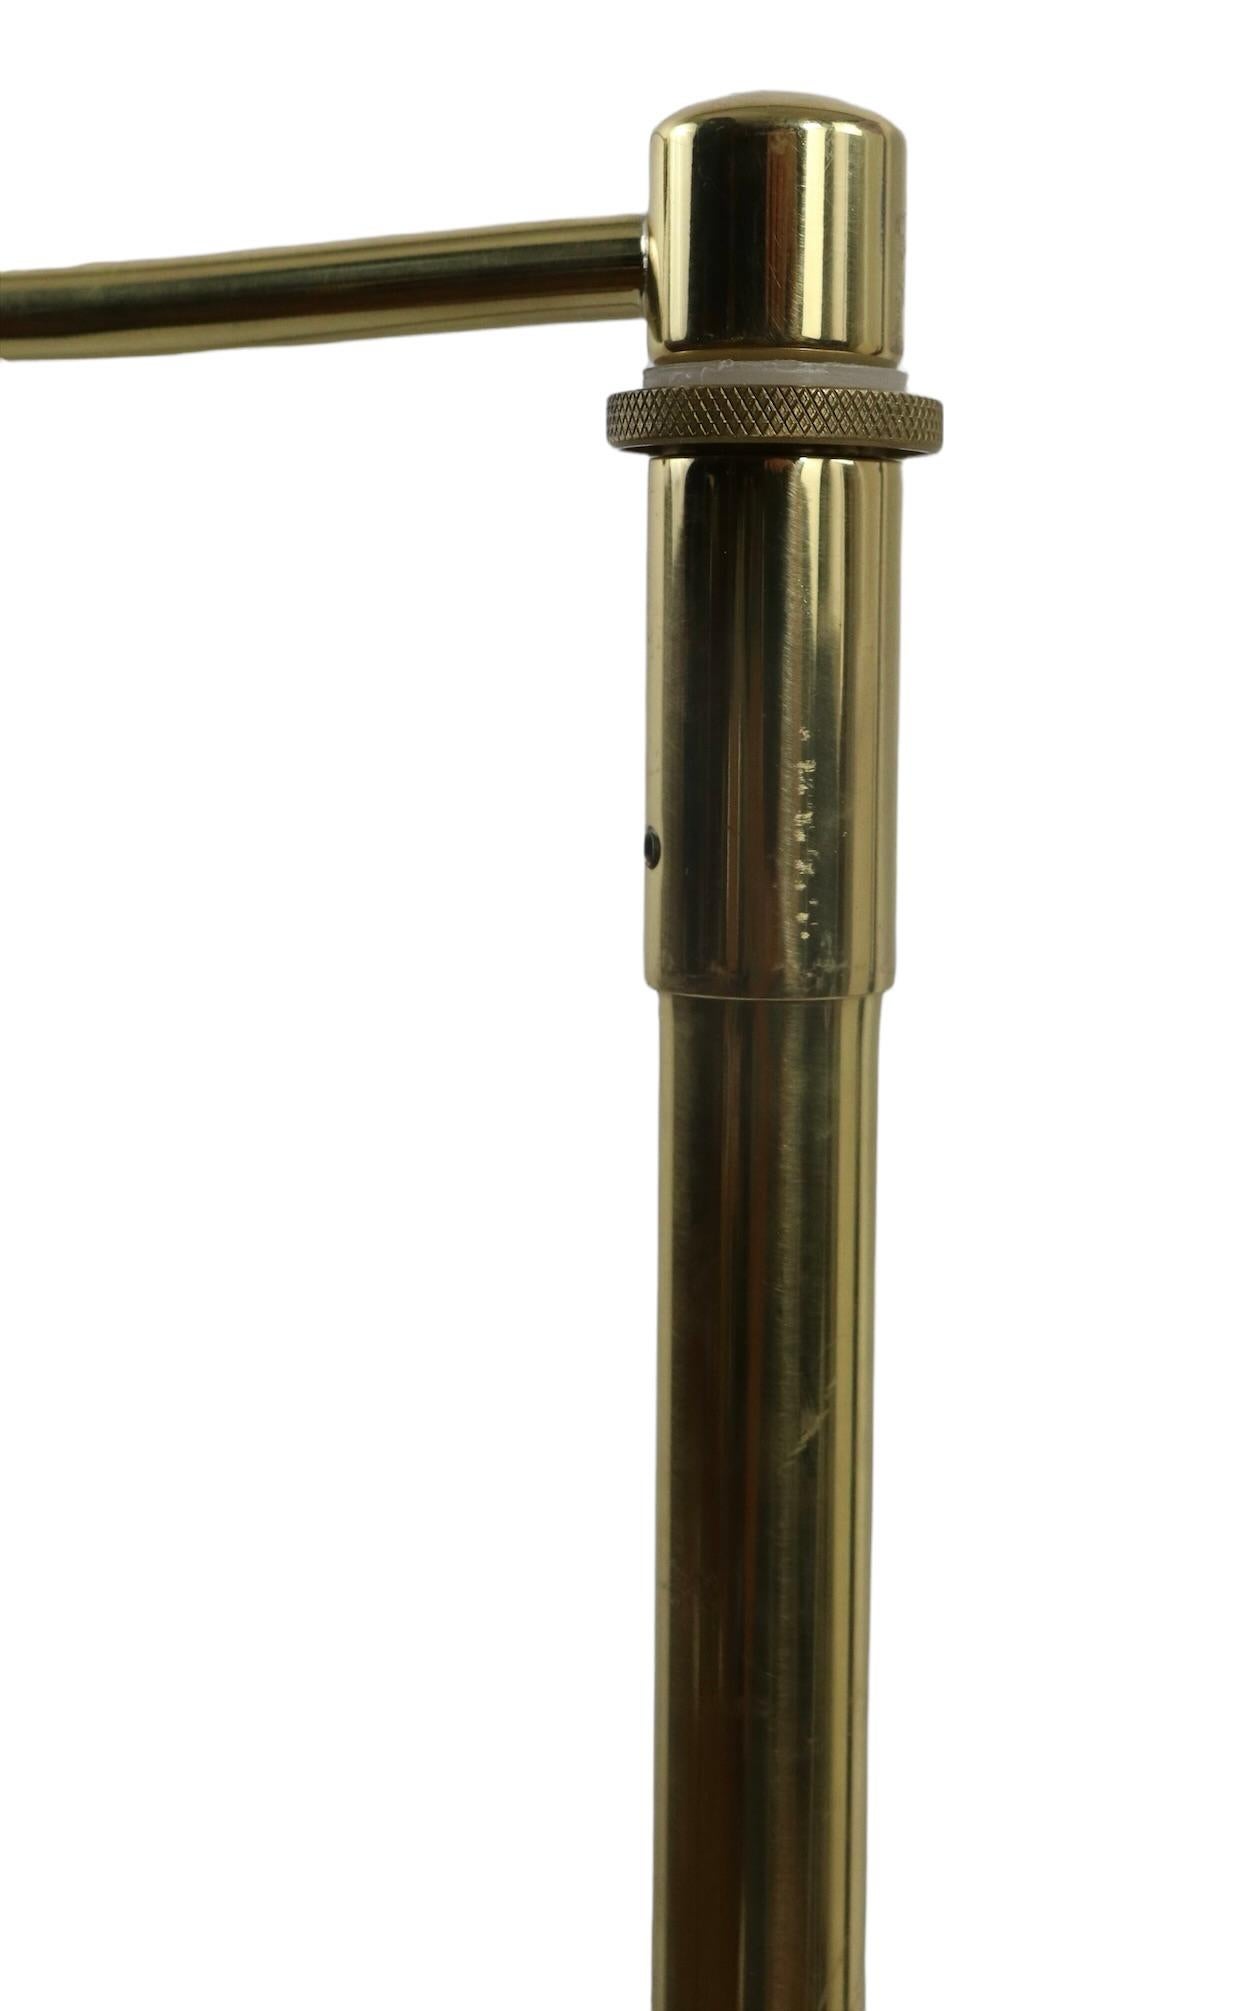 Adjustable Post Modern Brass Floor Lamp Made in Germany by Holtkotter Leuchten 1